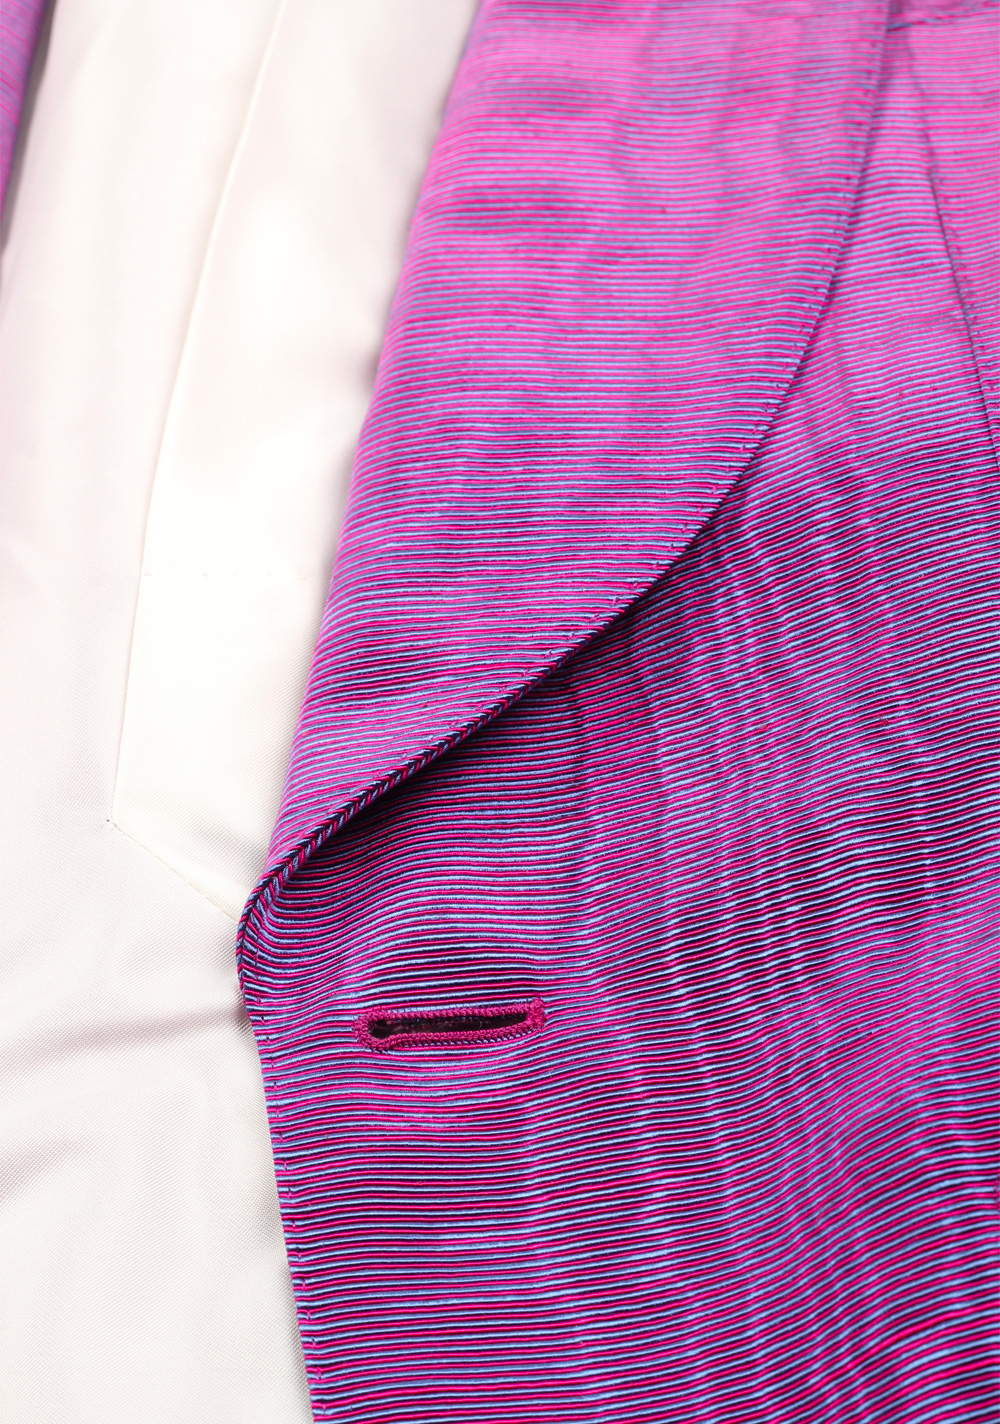 TOM FORD Shelton Pink Tuxedo Dinner Jacket Size 46 / 36R U.S. | Costume Limité